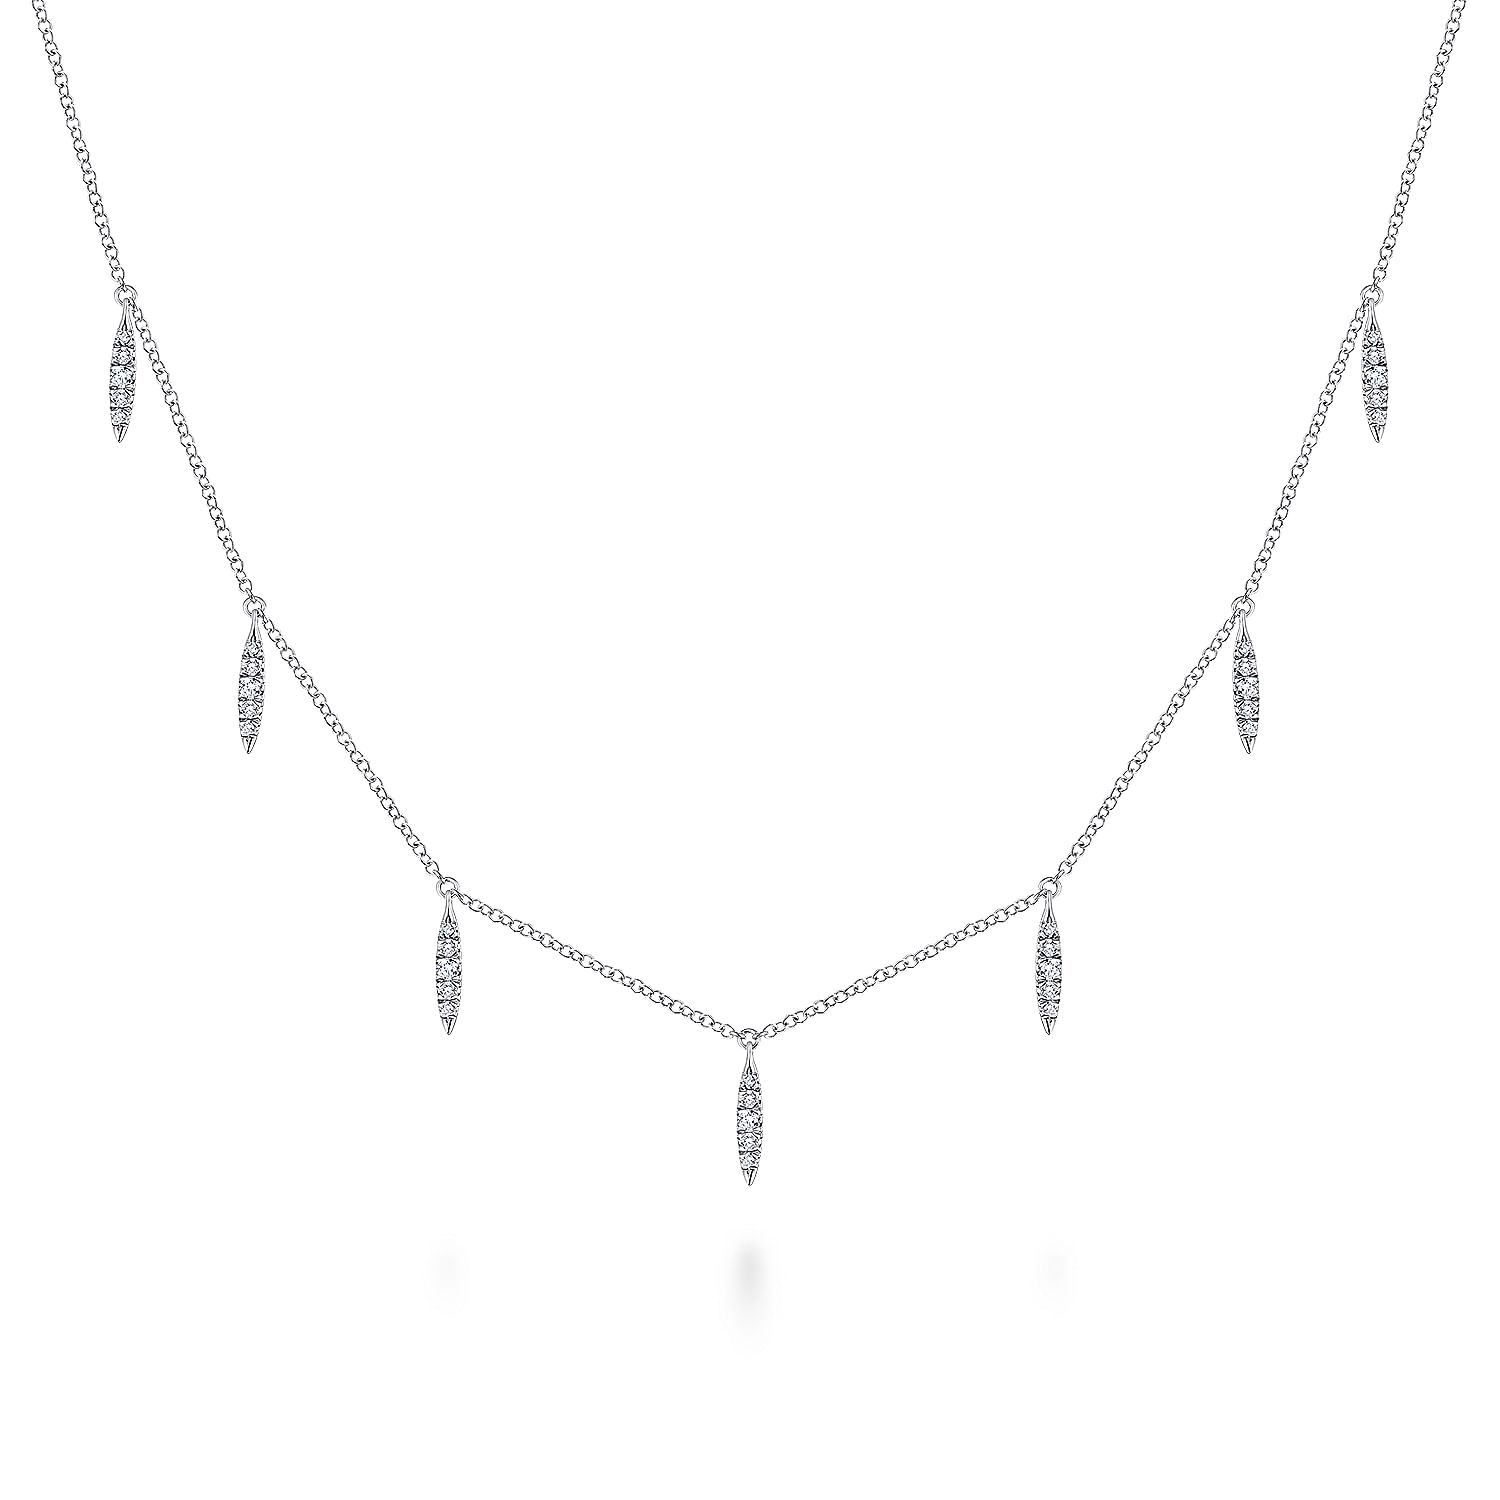 14K White Gold Diamond Choker Necklace with Diamond Spike Drops